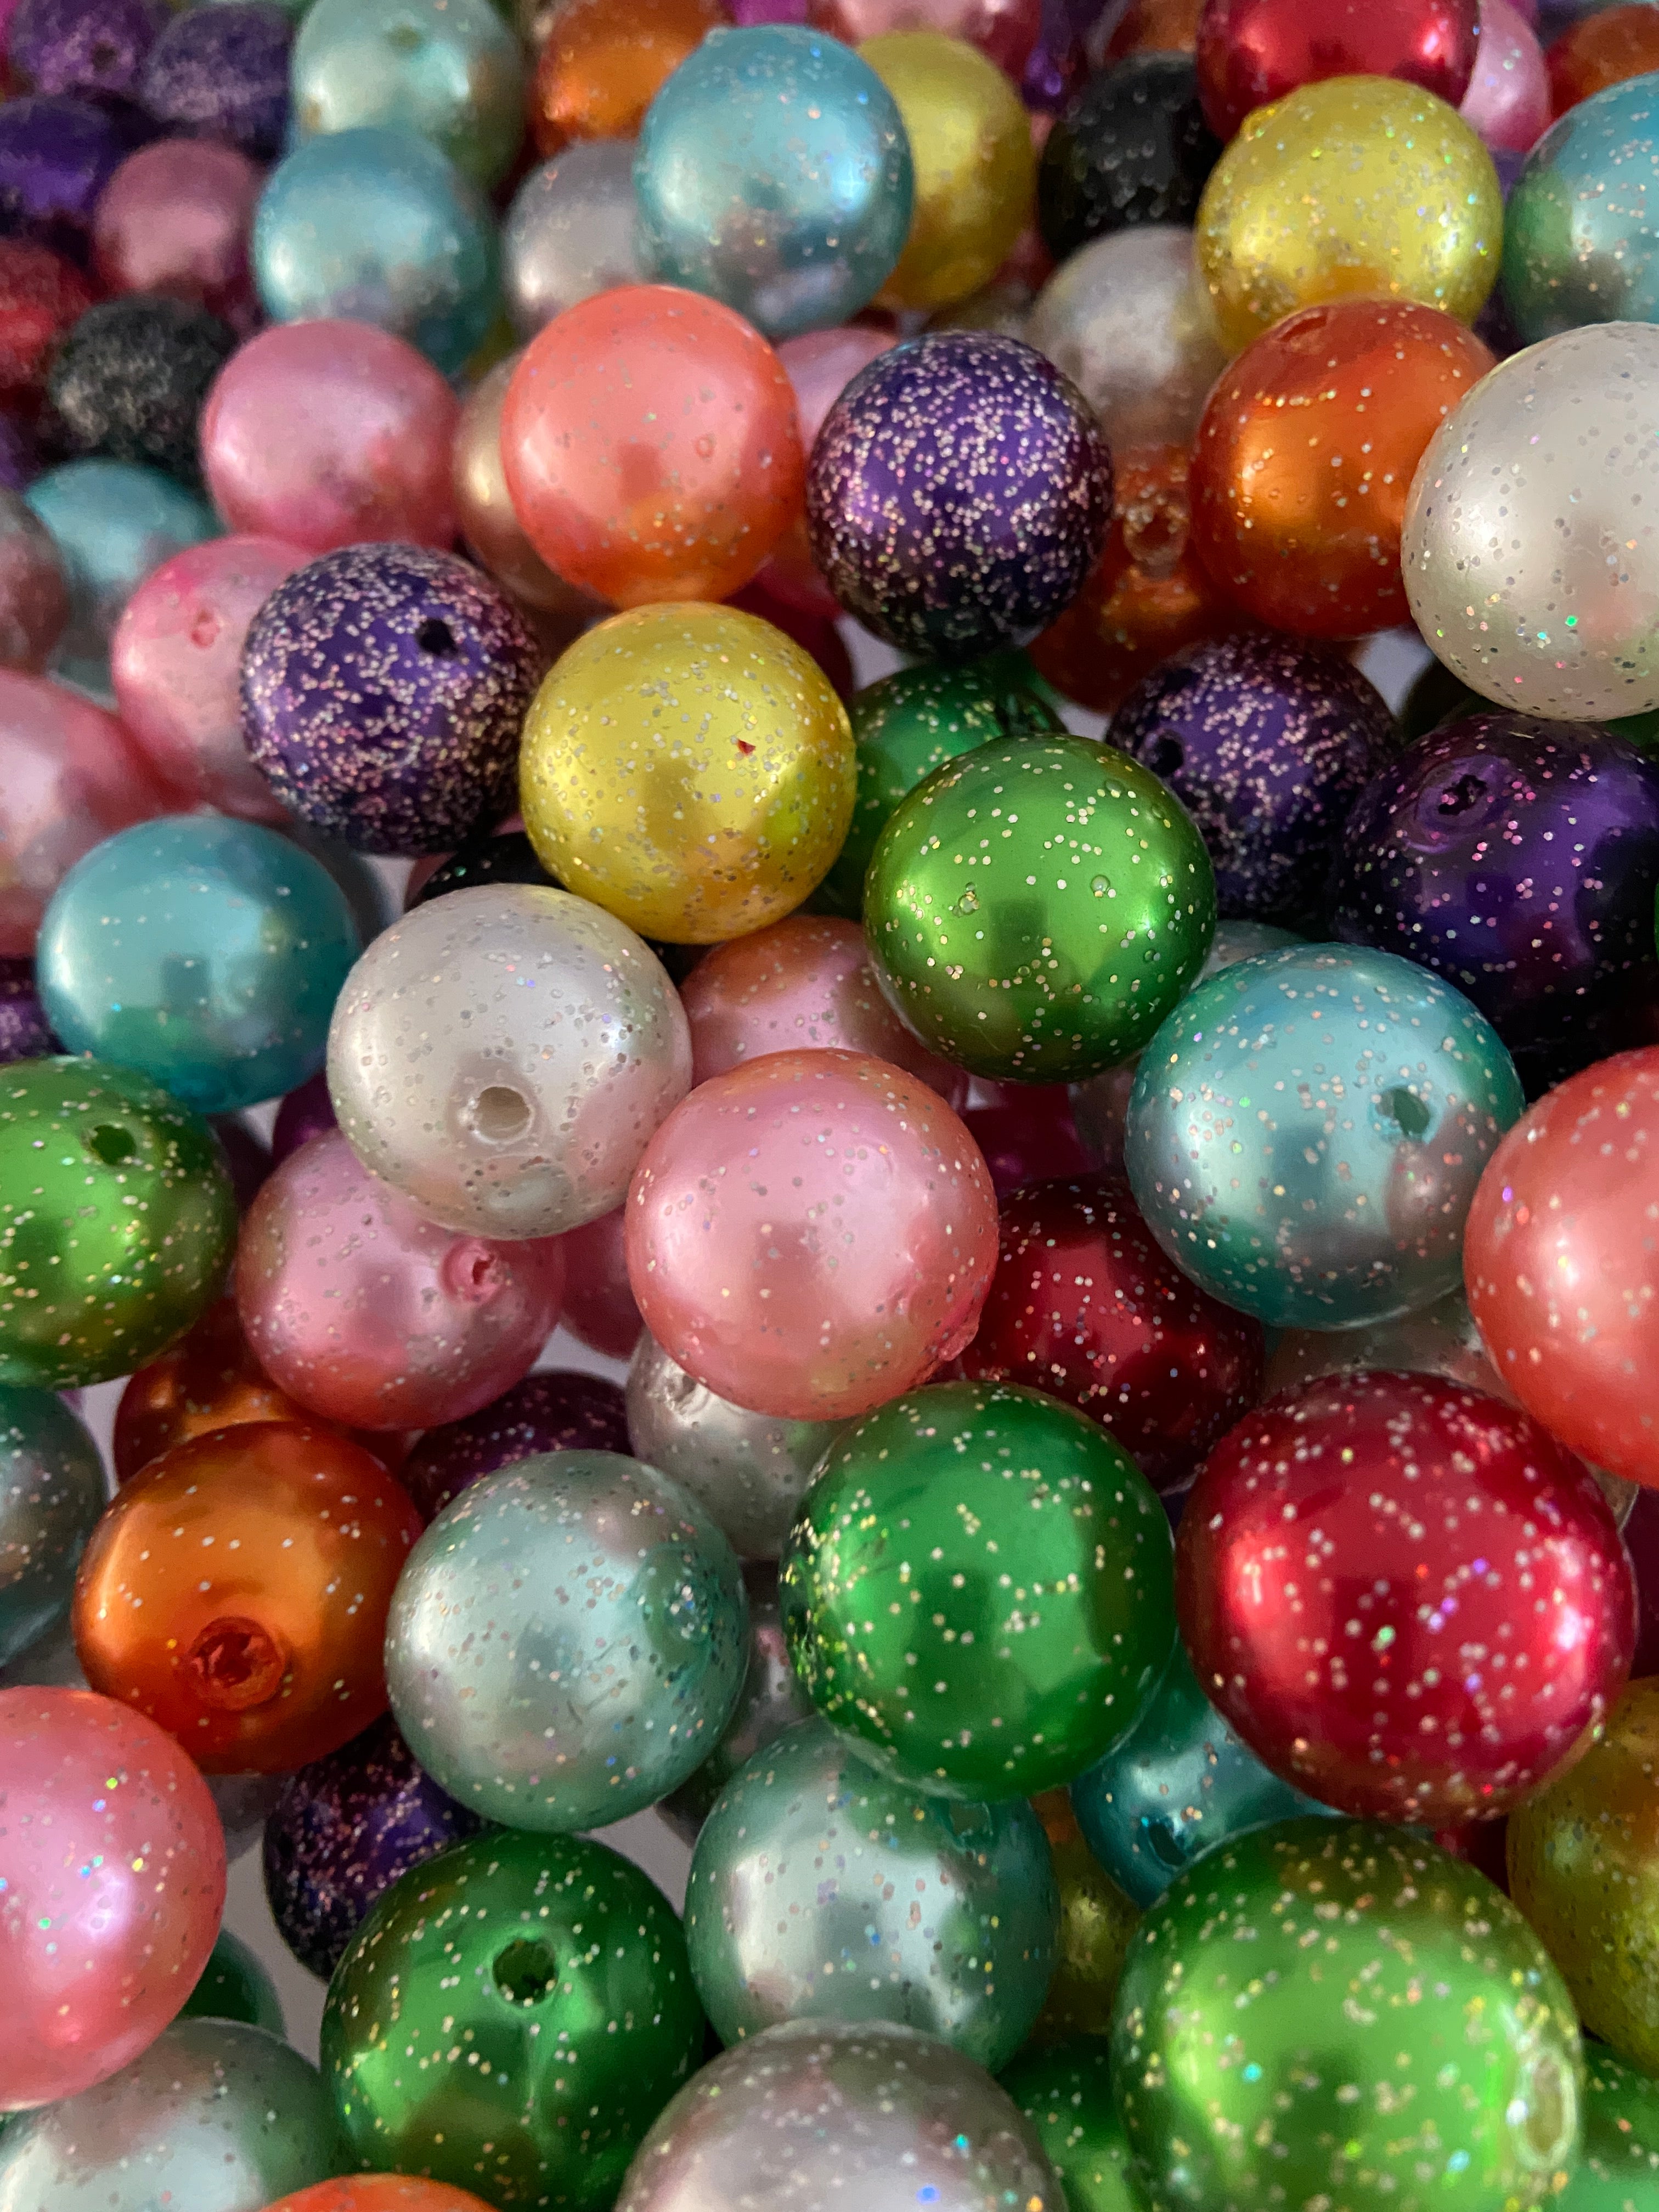 Custom Printed 20mm Bubblegum Beads Designed by You